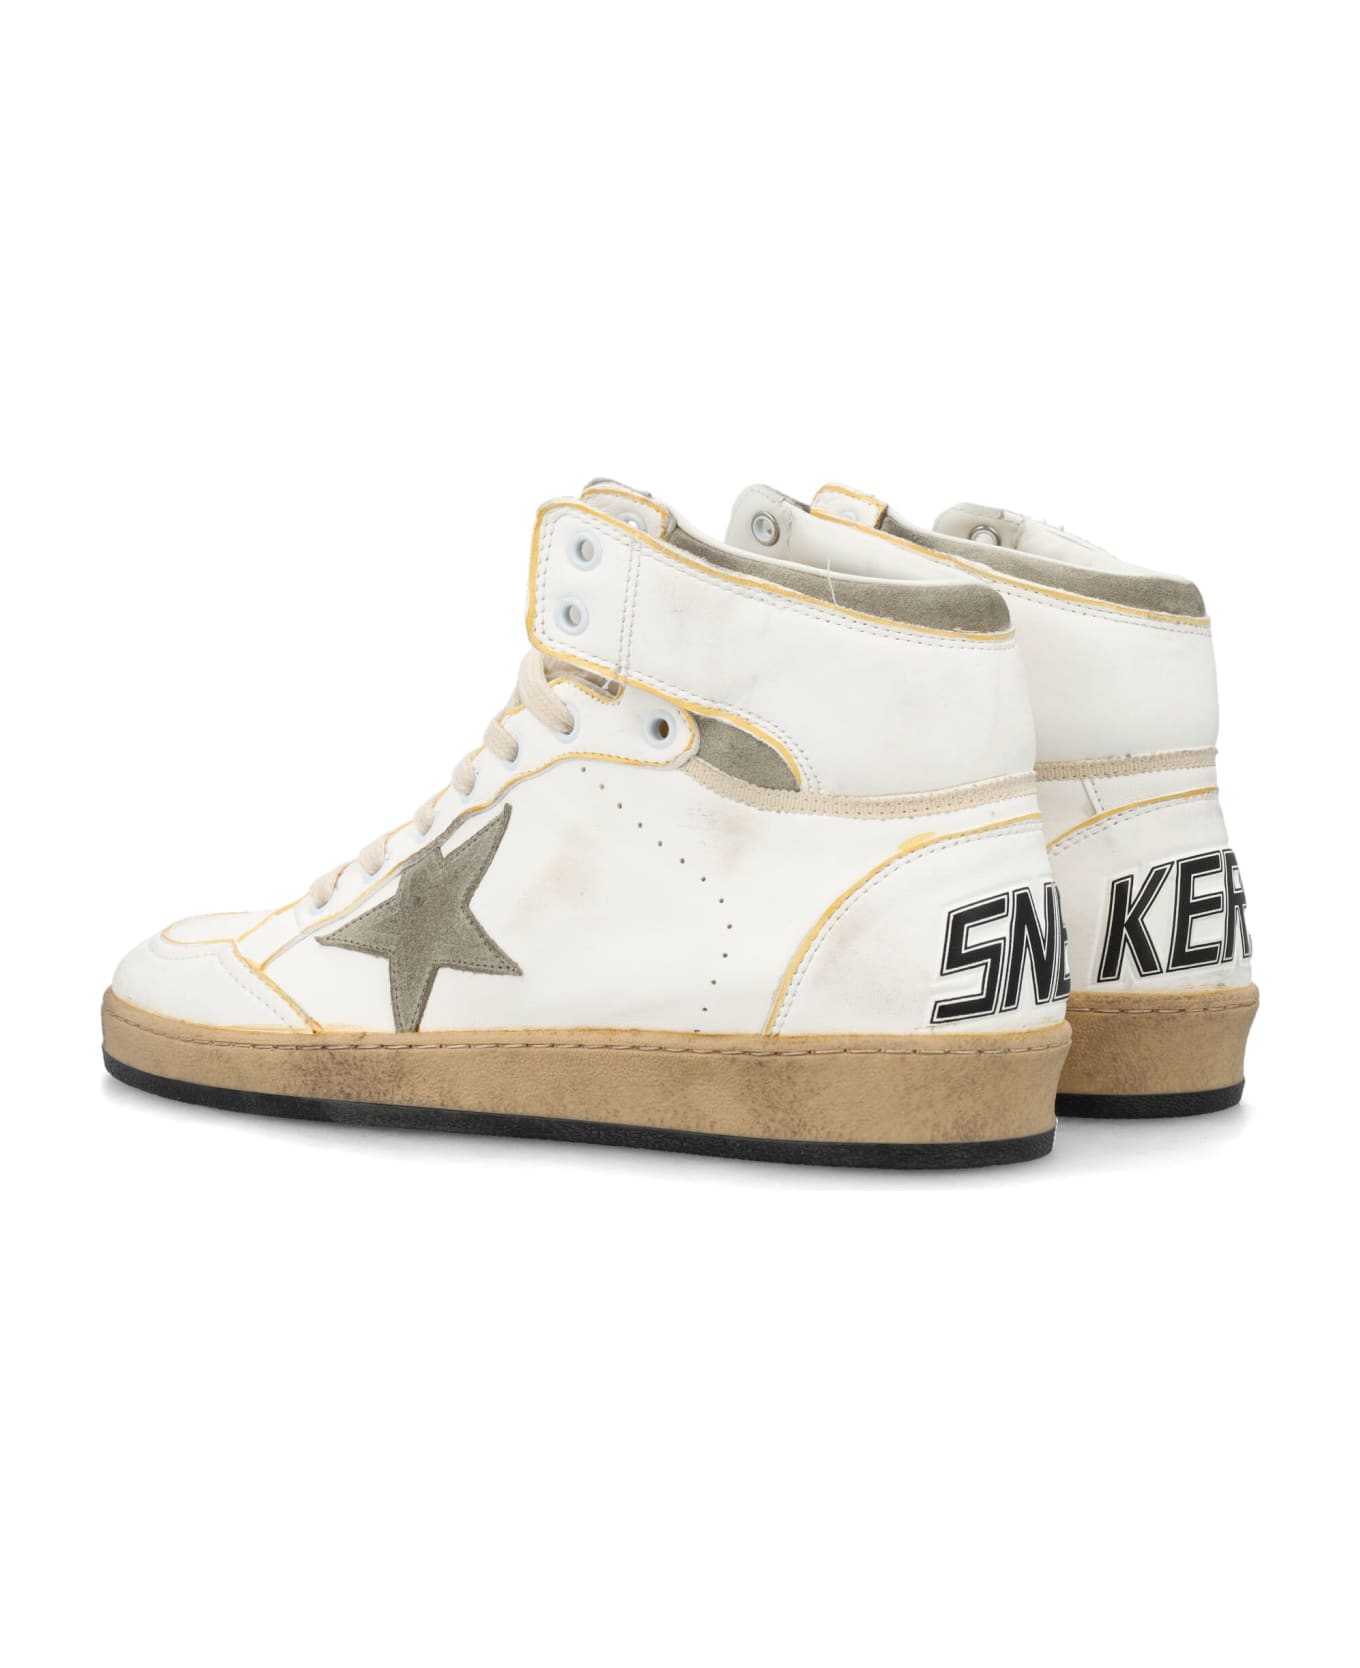 Golden Goose Sky Star Sneakers - White/Taupe スニーカー